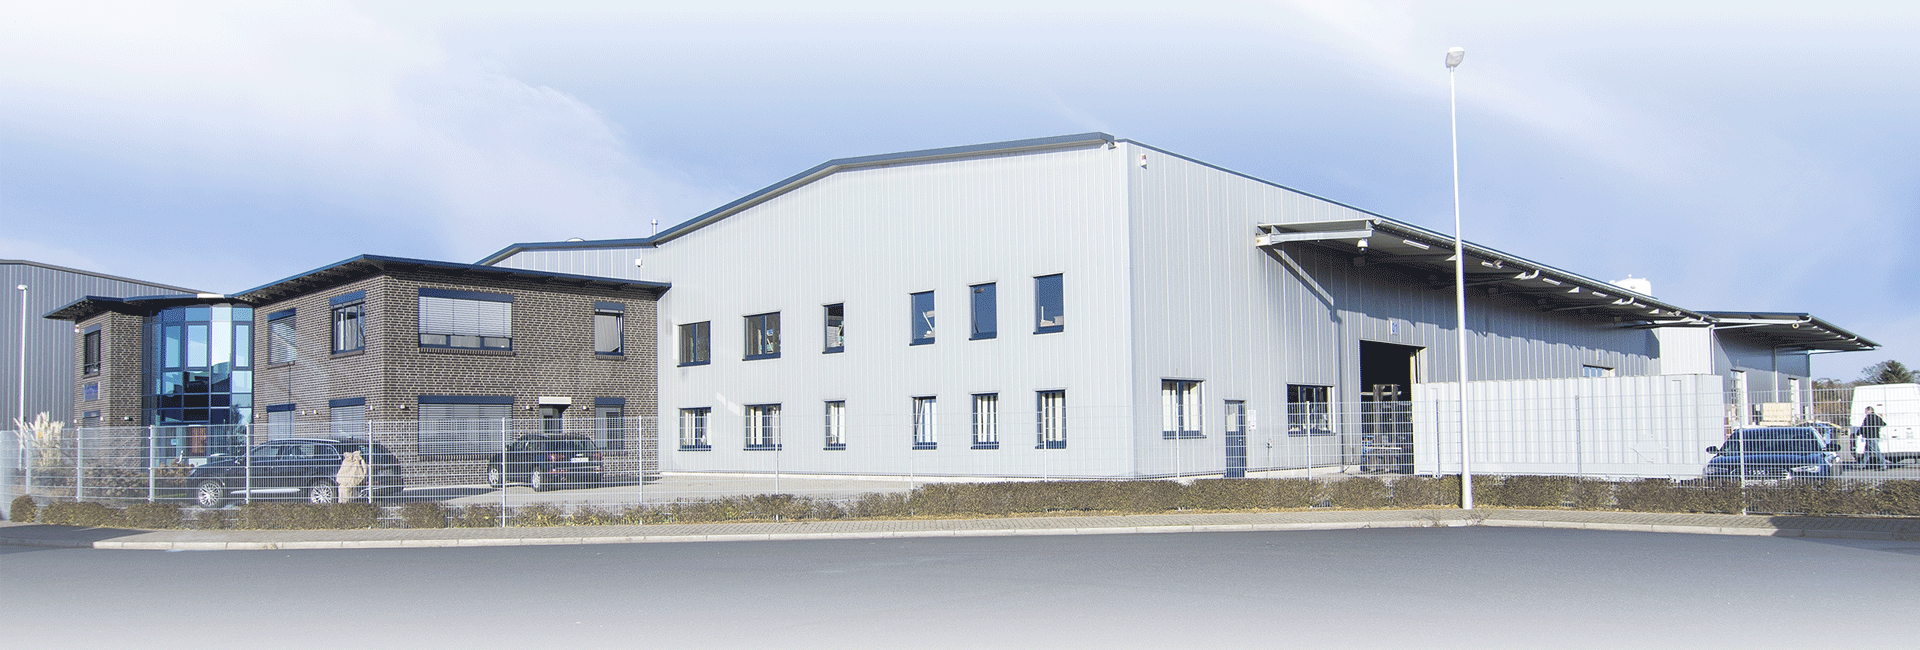 J. Klose Maschinenbau GmbH & Co. KG - Company buildung